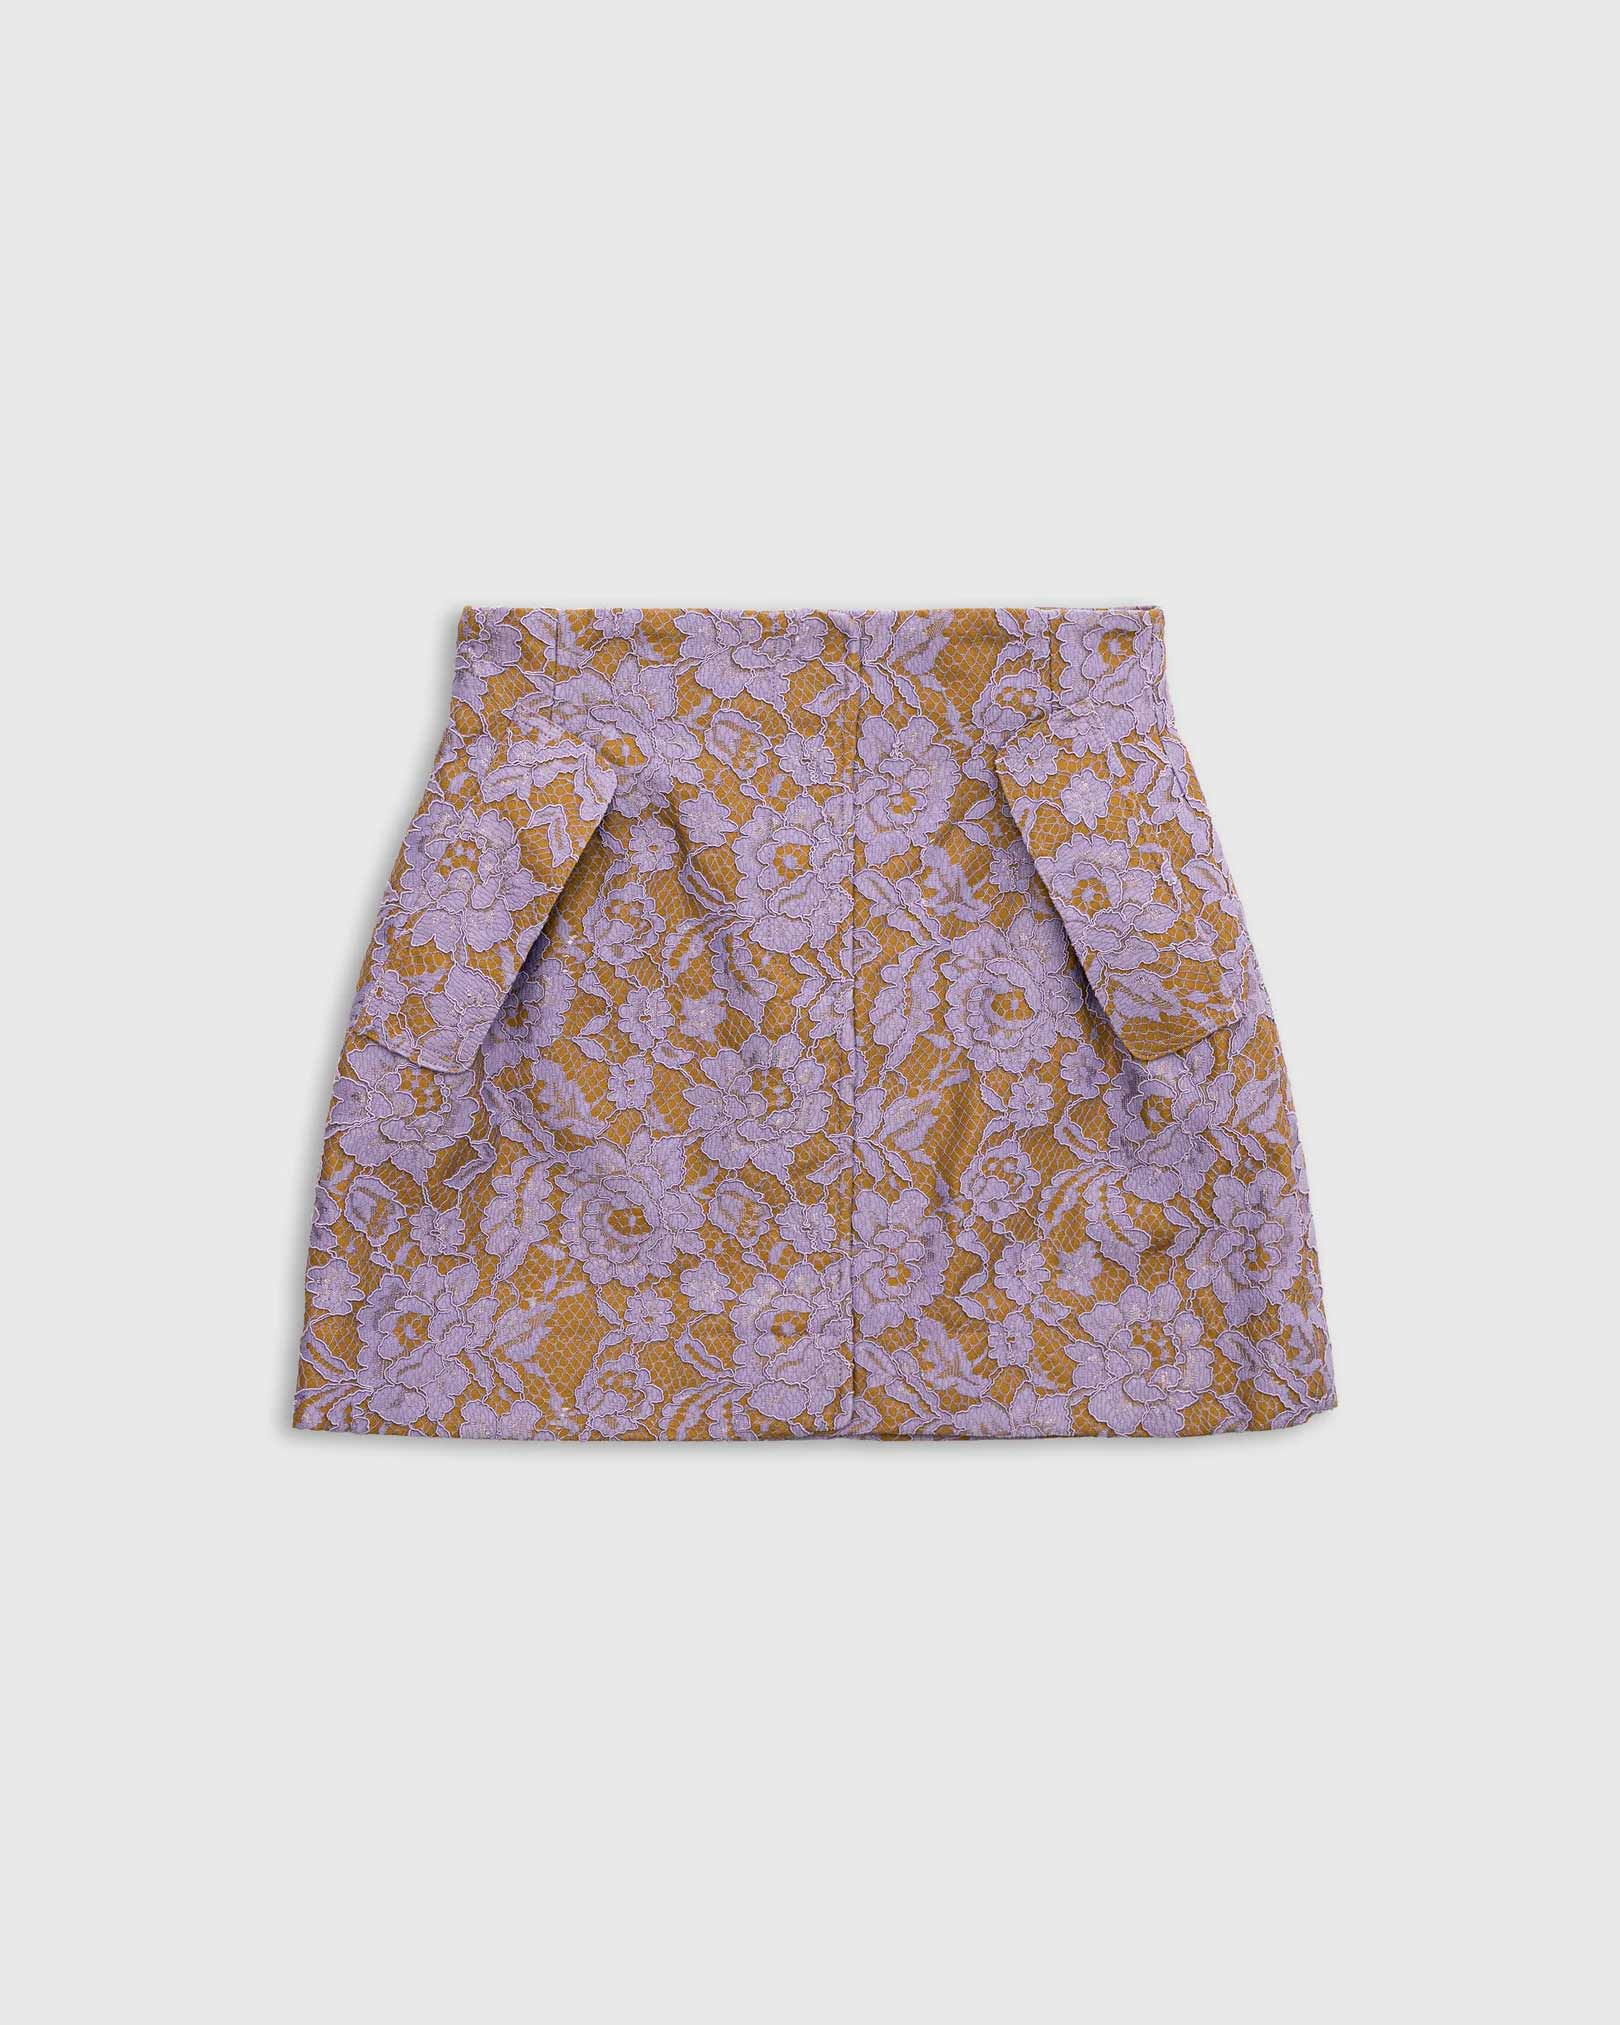 AKNVAS Rubin Lace Mini Skirt in Amethyst available at Lahn.shop